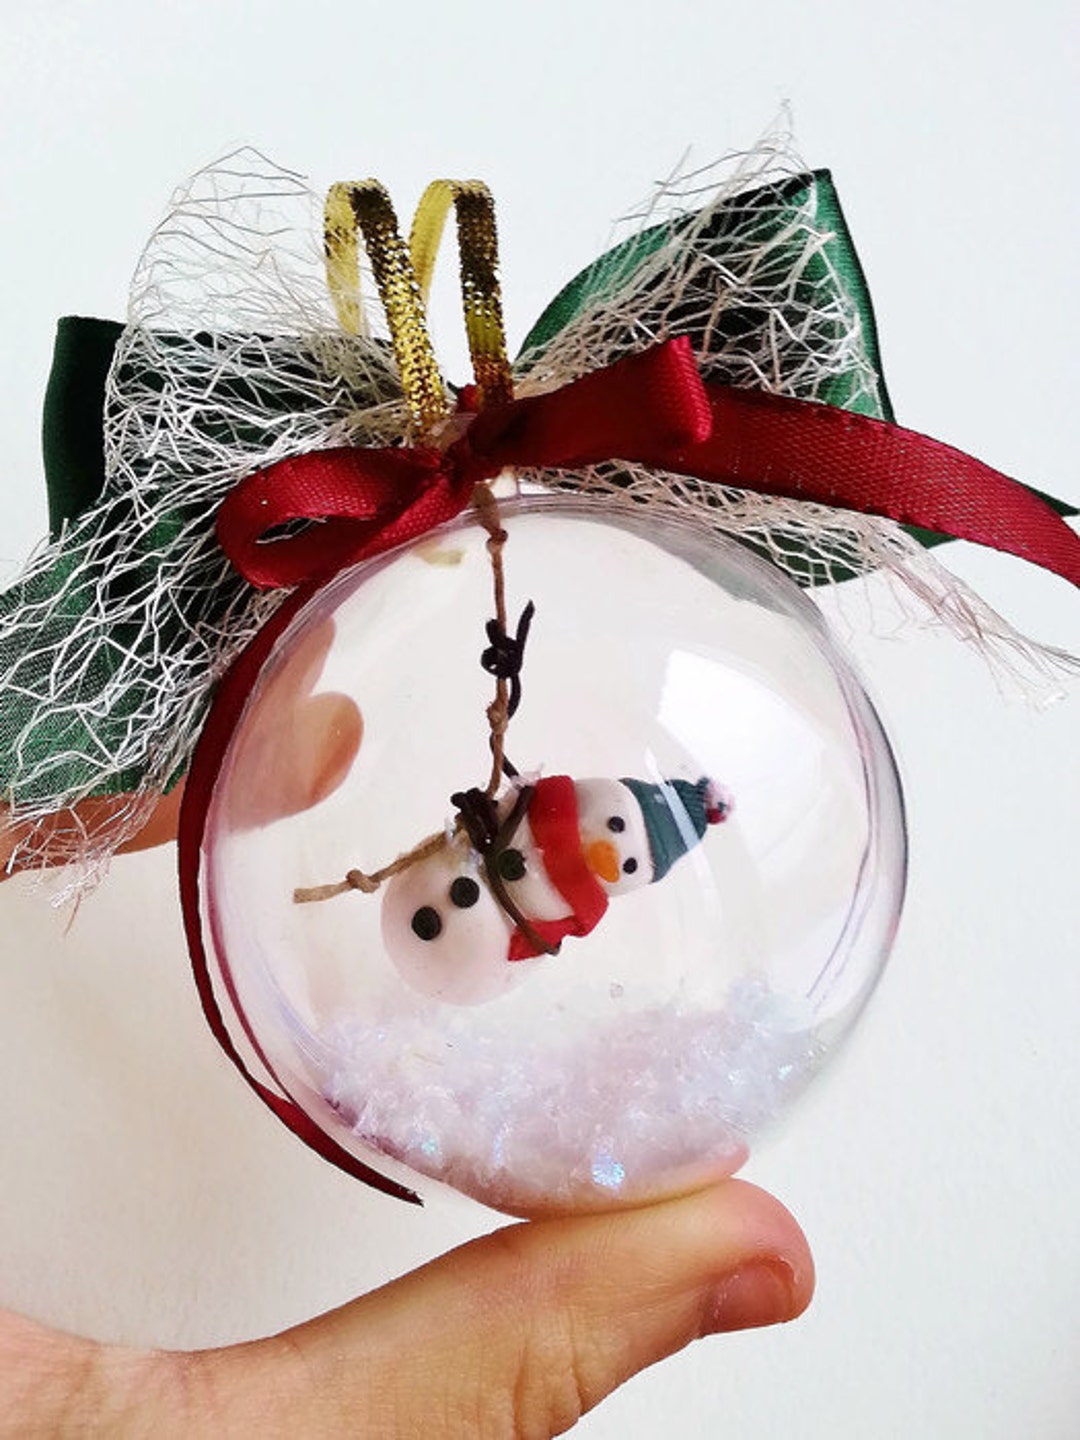 Aleene's Original Glues - DIY Mini Snowman Light Ornaments